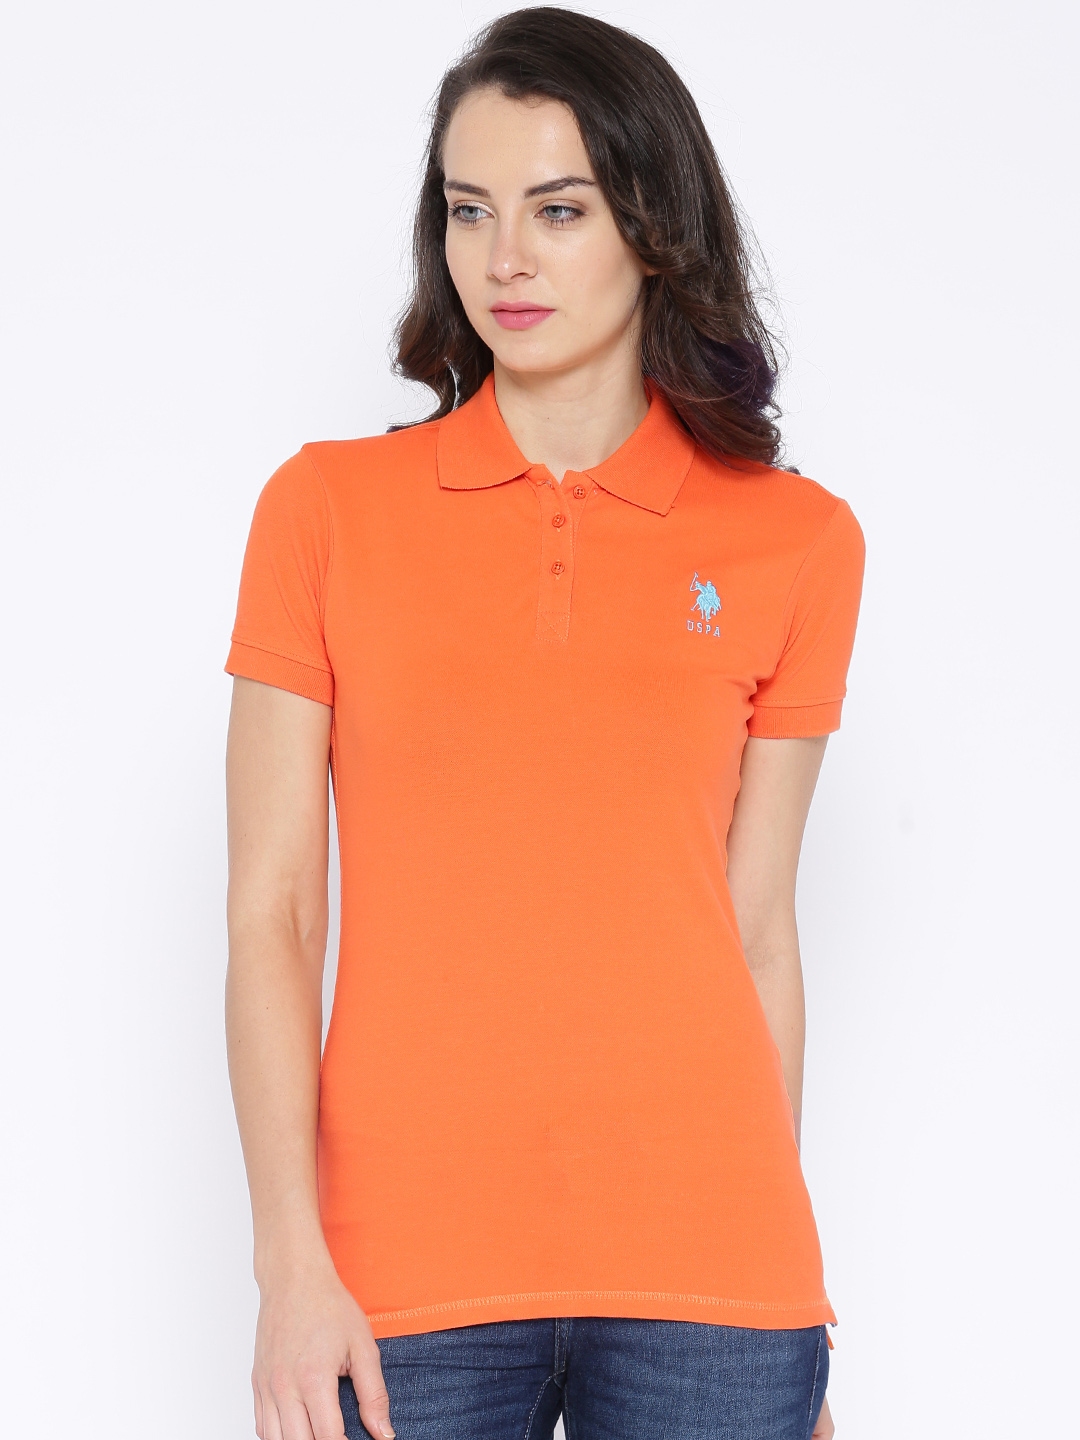 orange polo shirt women